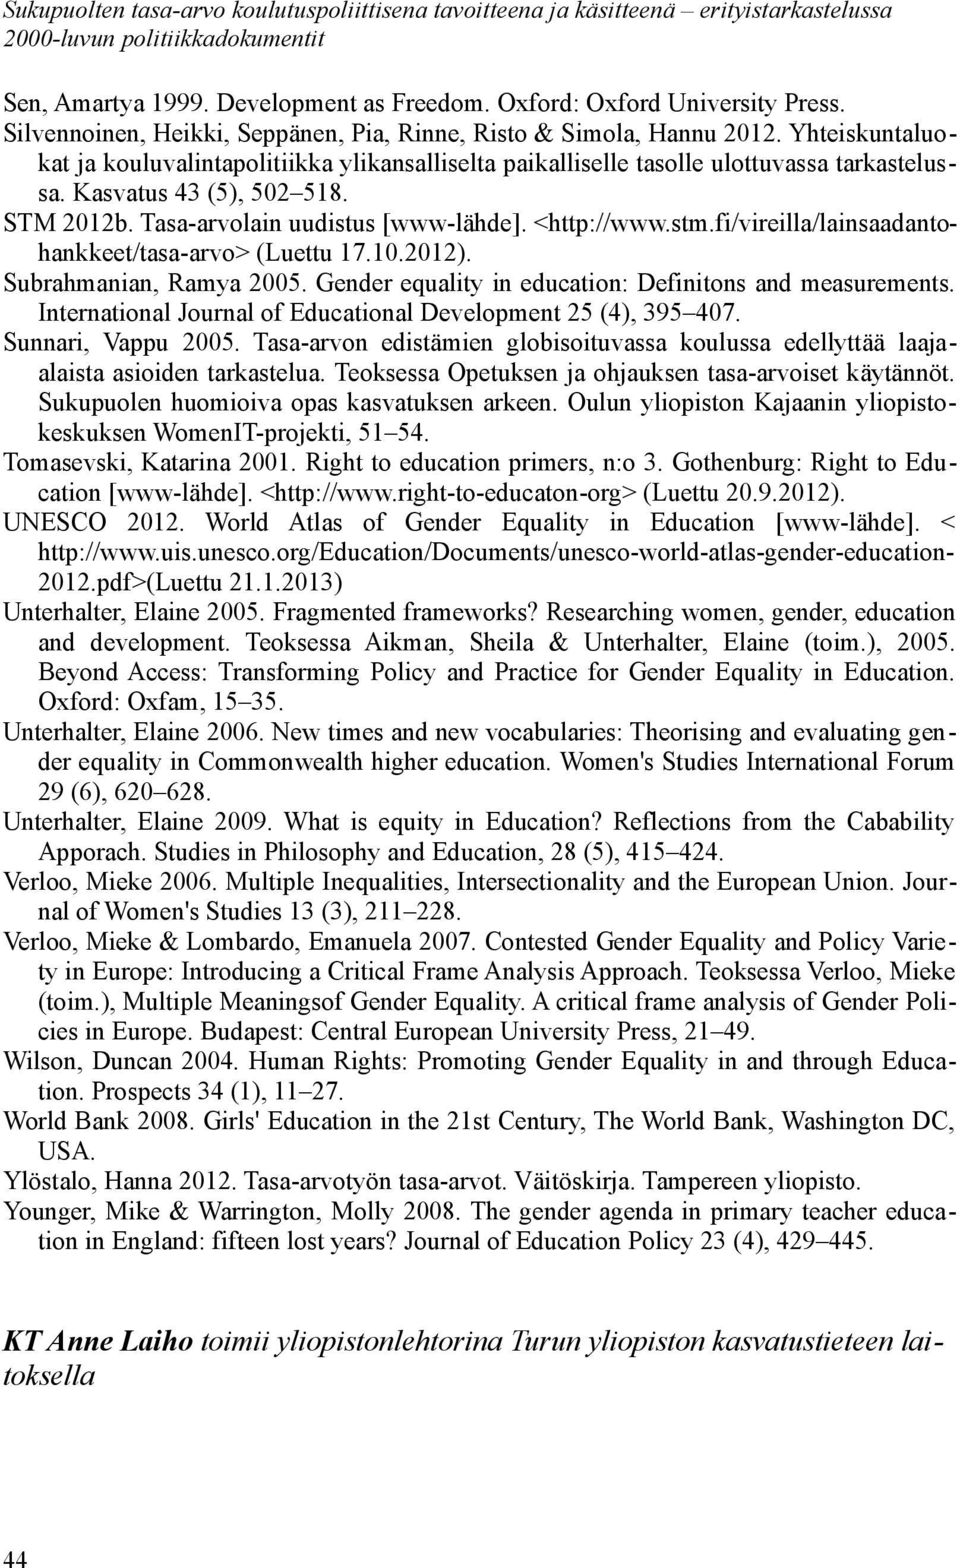 Kasvatus 43 (5), 502 518. STM 2012b. Tasa-arvolain uudistus [www-lähde]. <http://www.stm.fi/vireilla/lainsaadantohankkeet/tasa-arvo> (Luettu 17.10.2012). Subrahmanian, Ramya 2005.